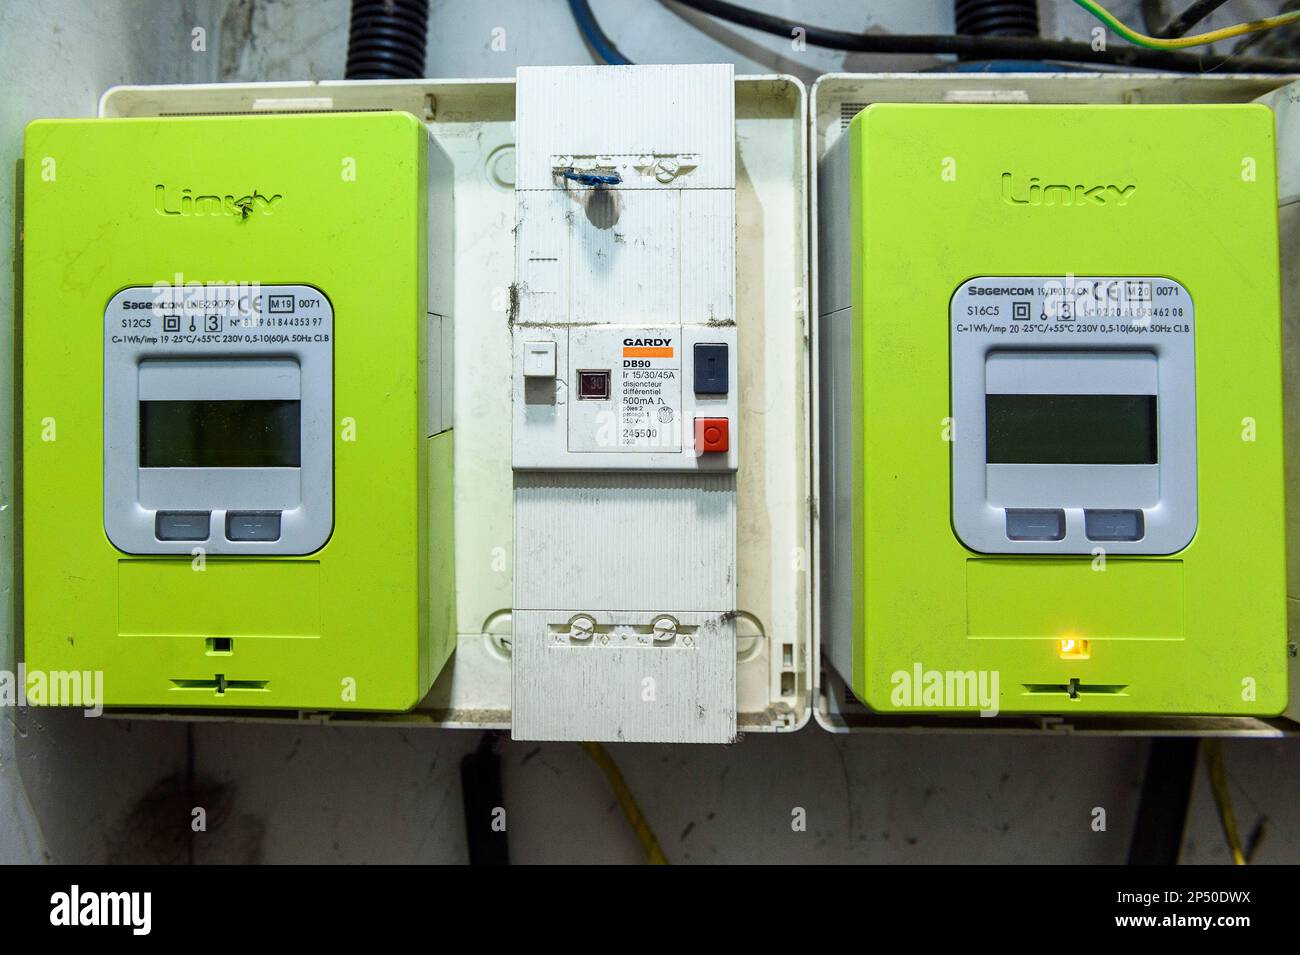 Linky Electricity meter  Compteurs electrique Linky - compteur intelligent  Stock Photo - Alamy